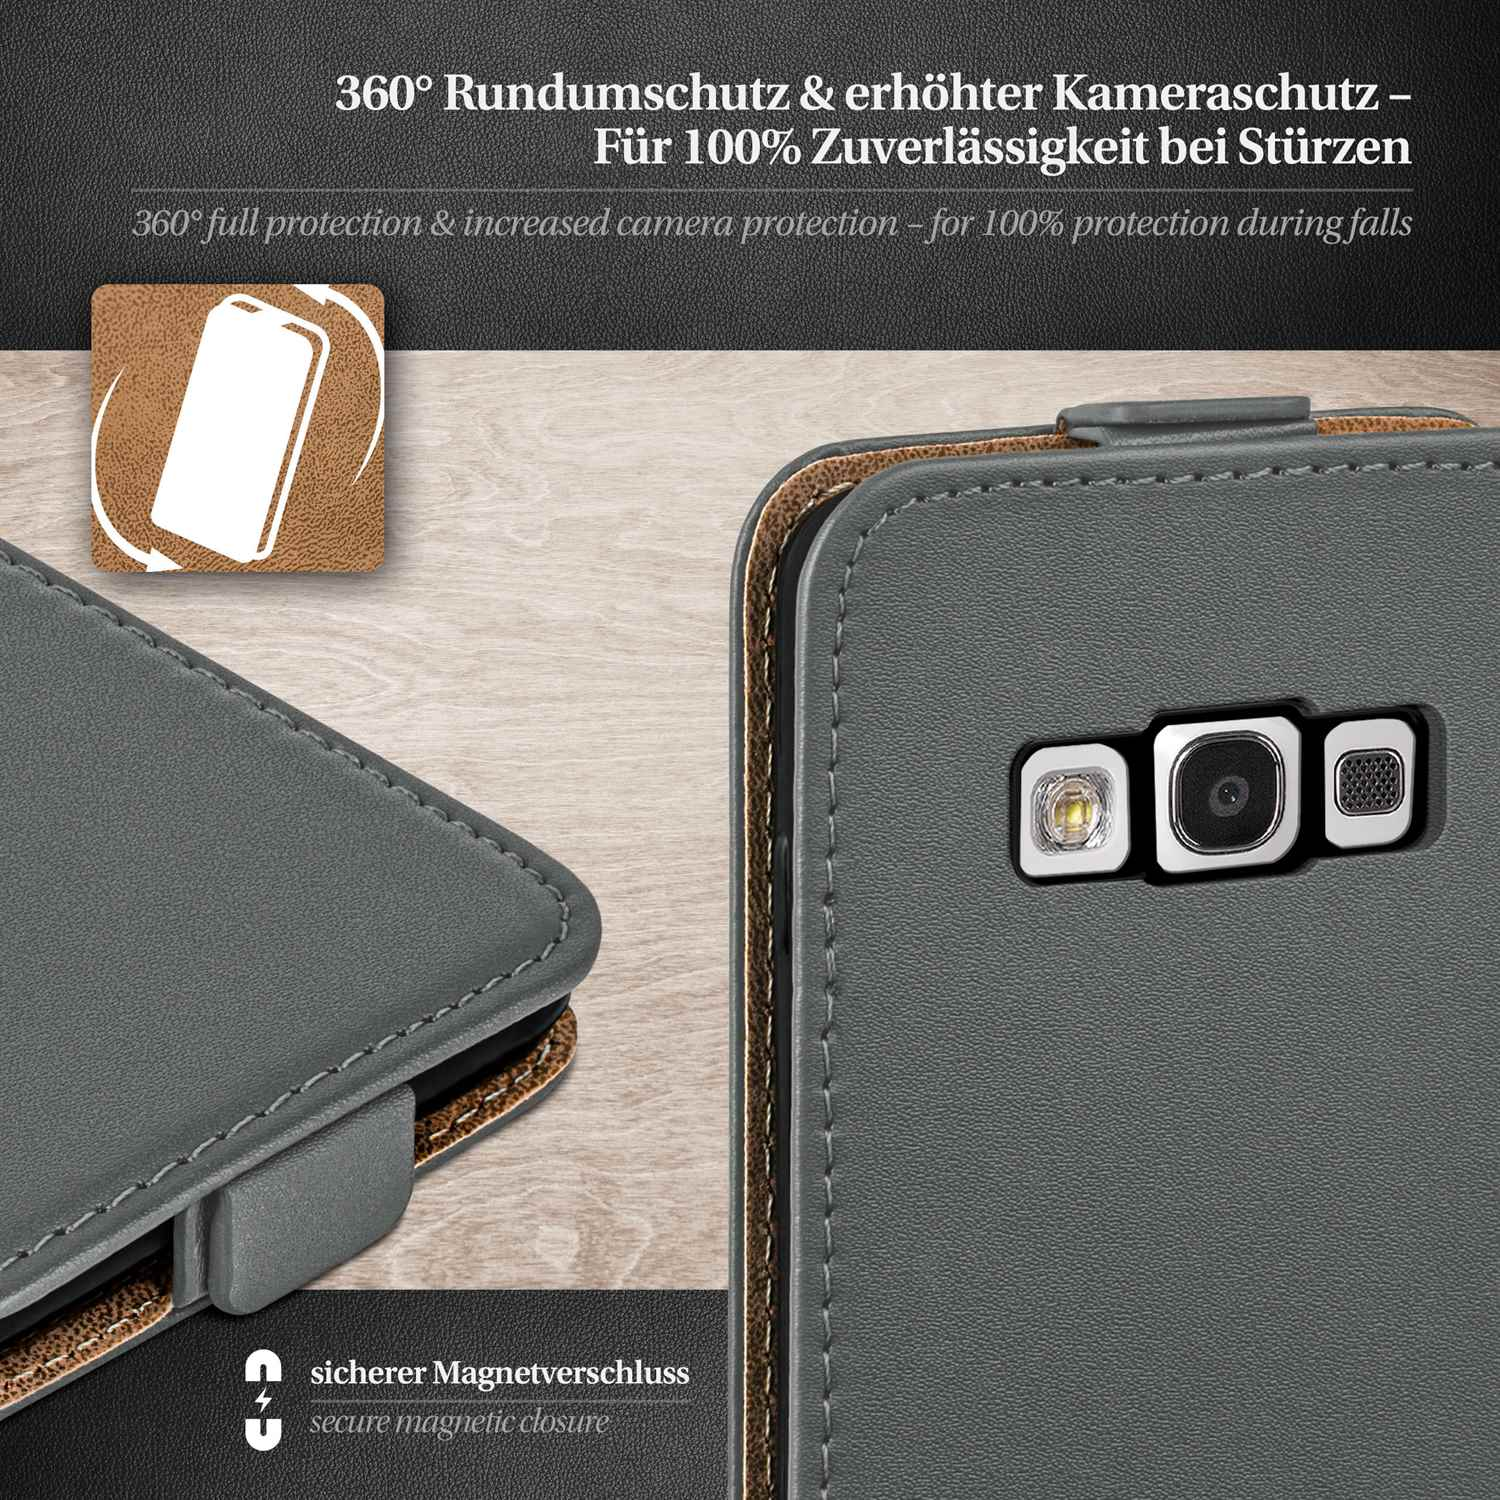 MOEX Flip Case, Flip Galaxy Samsung, S3, Cover, Anthracite-Gray